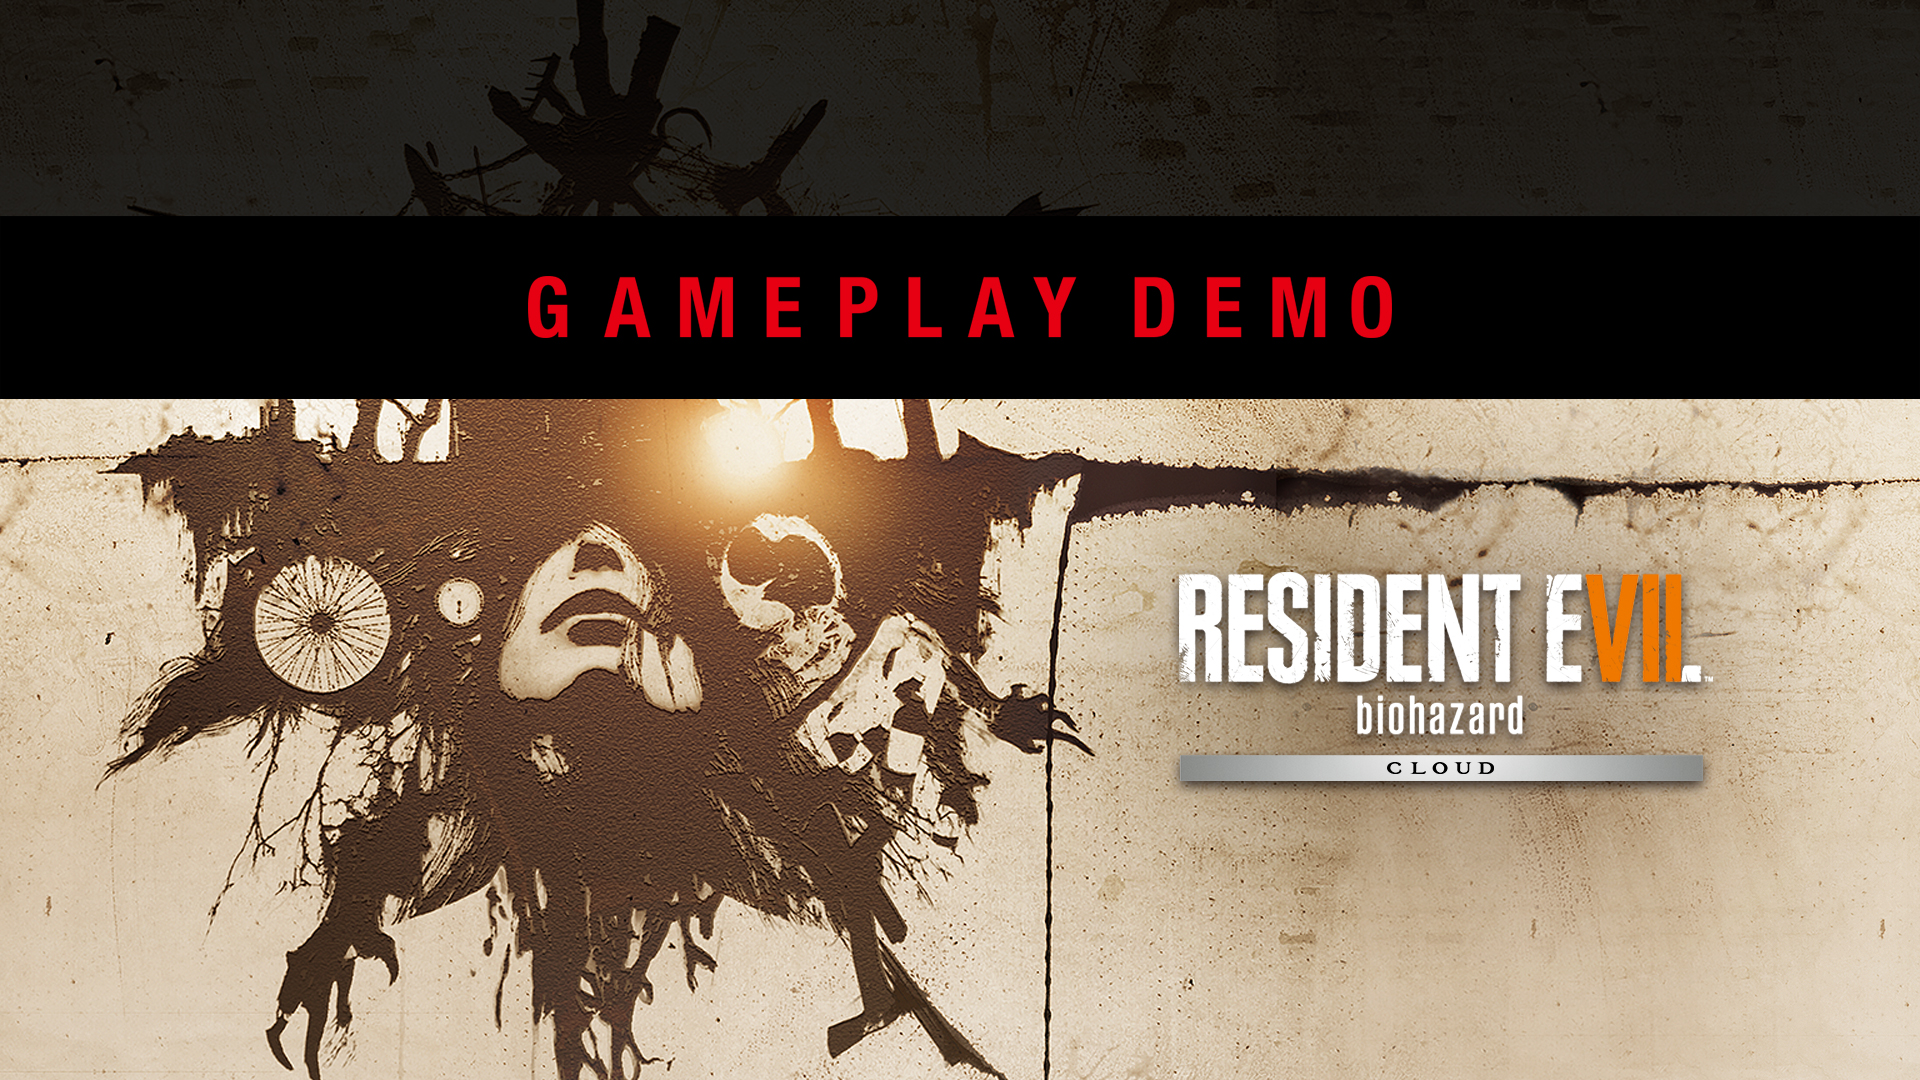 Resident Evil 7 biohazard Cloud Gameplay Demo